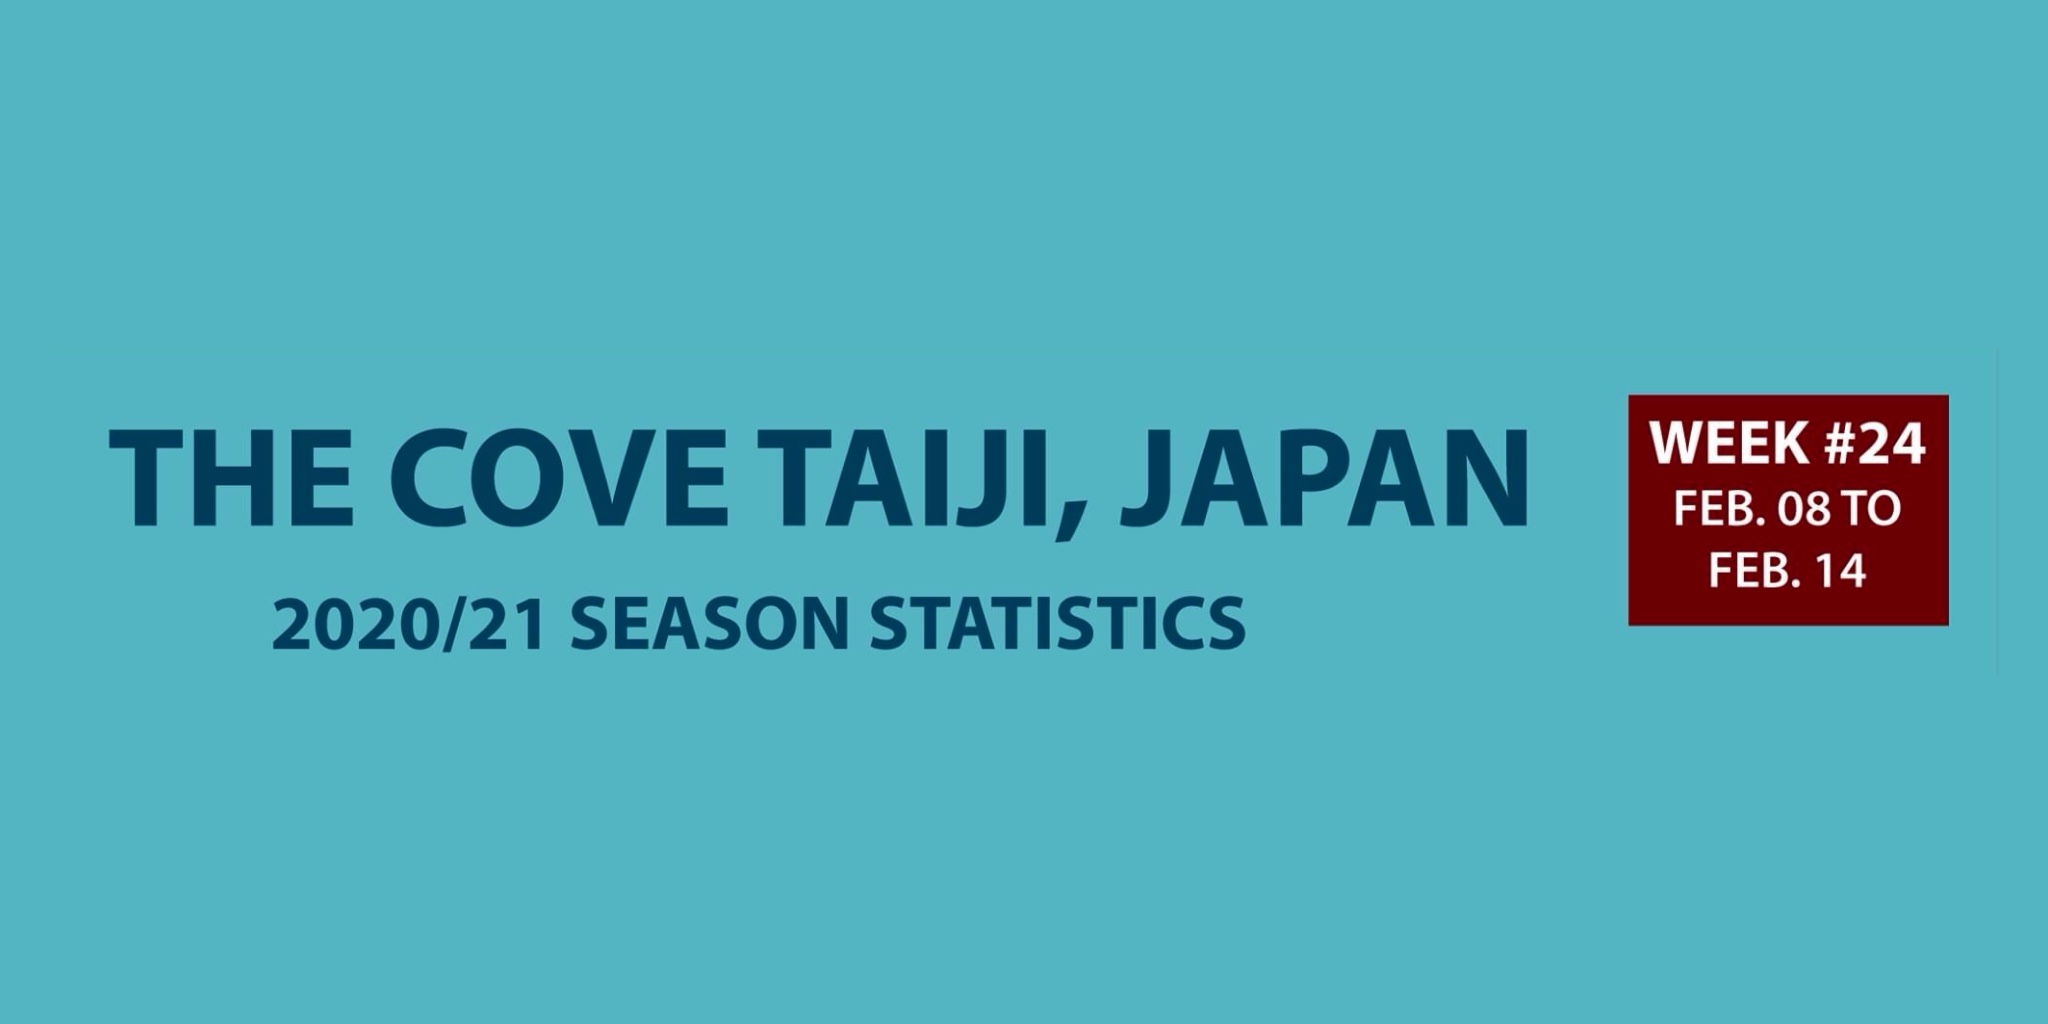 Chasse au dauphin à Taïji (Japon) – Bilan semaine du 8 au 14 février 2021 #24